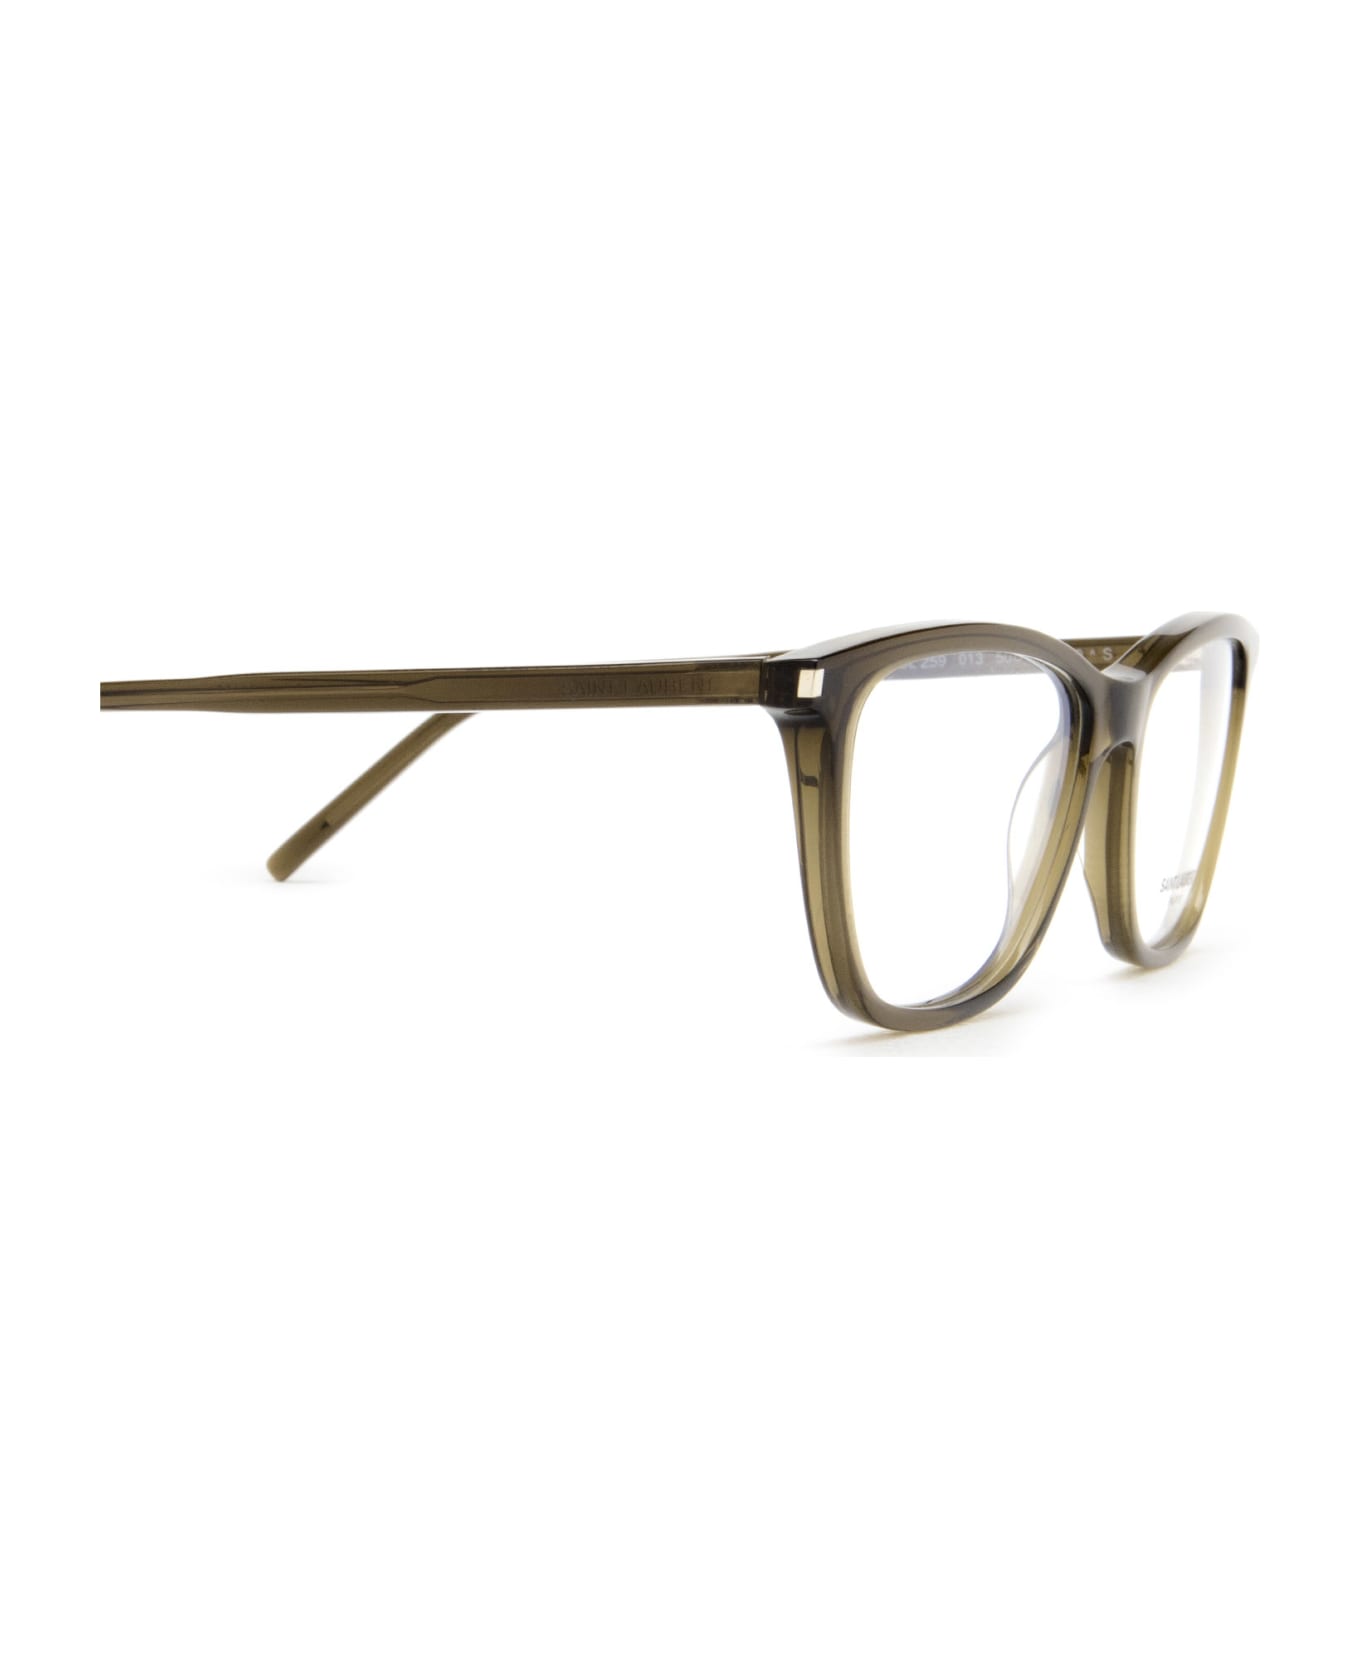 Saint Laurent Eyewear Sl 259 Green Glasses - Green